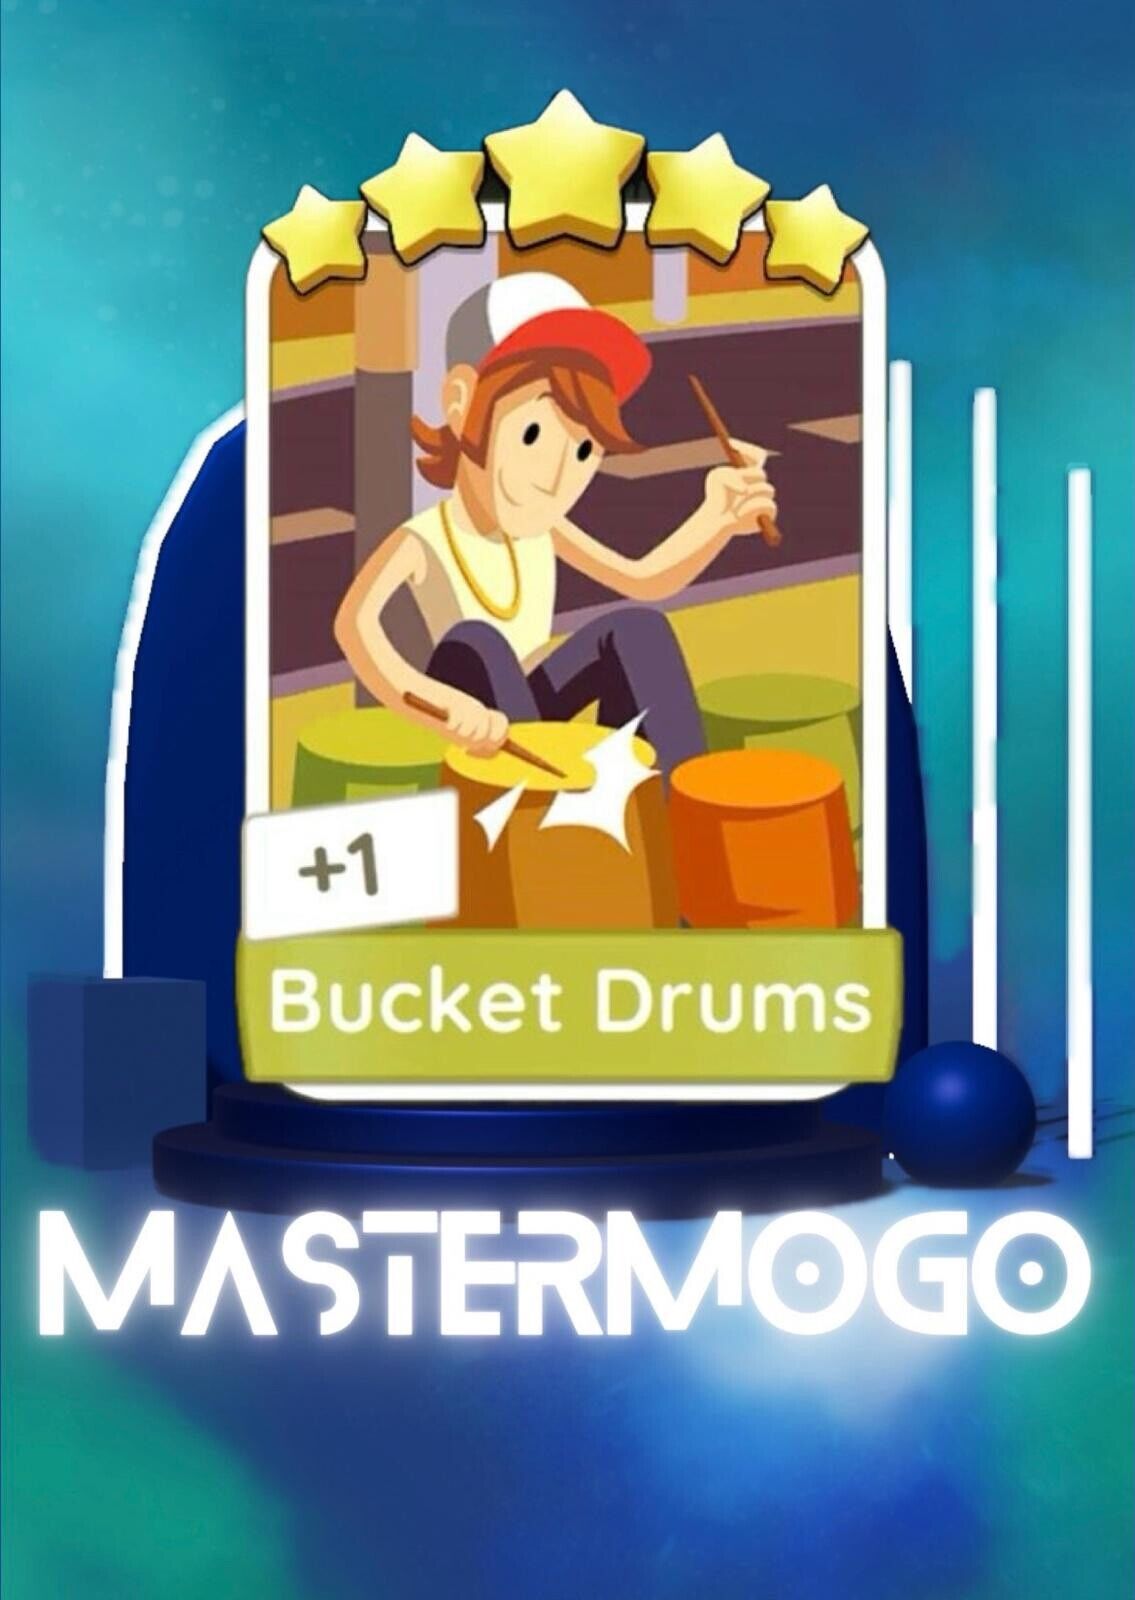 Monopoly Go- Bucket Drums 5 ⭐- set #20 Sticker